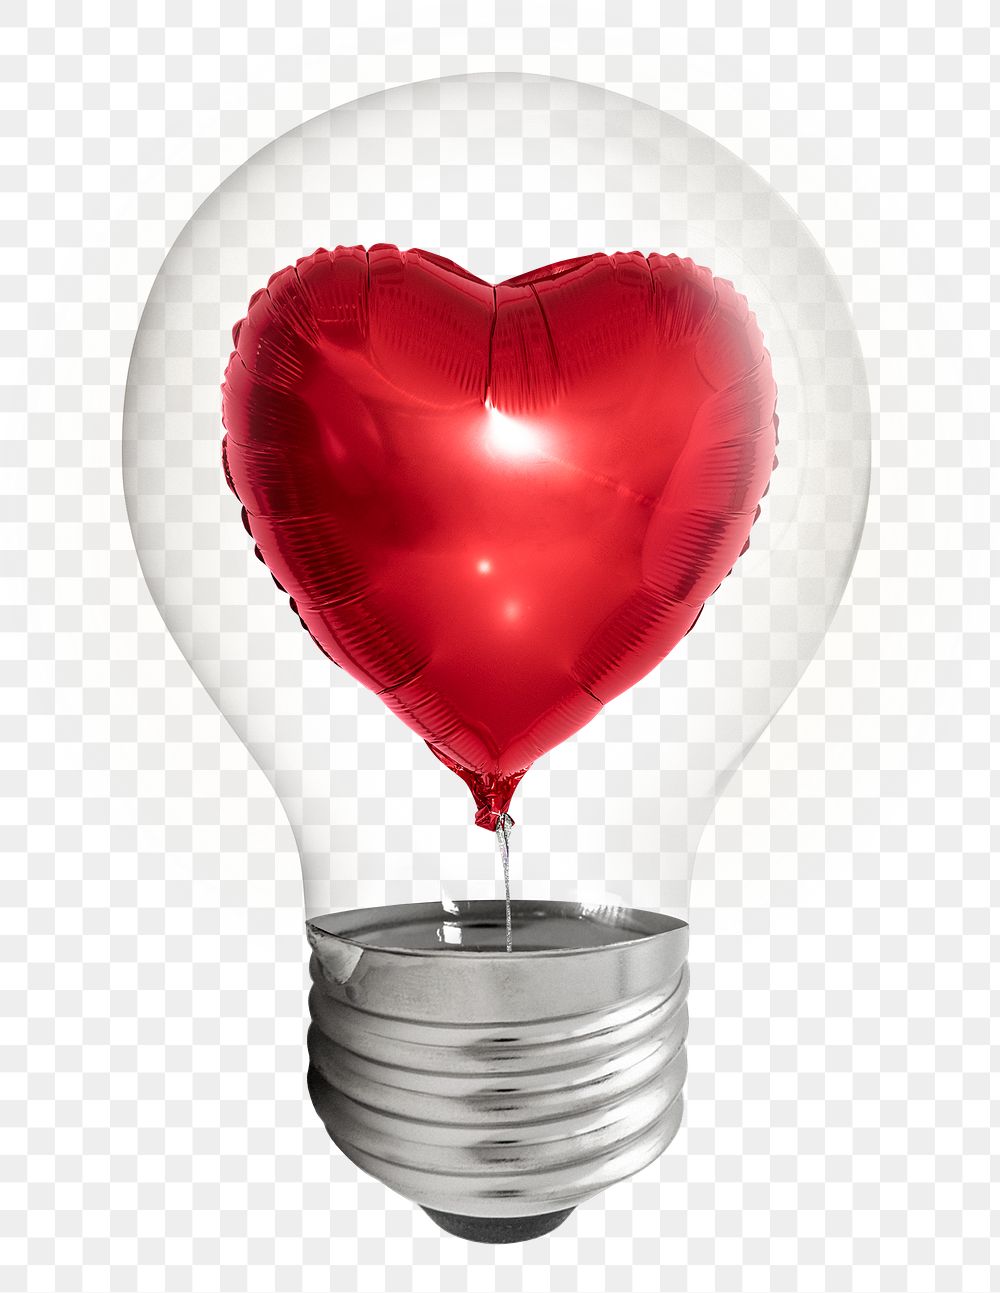 Heart balloon png sticker, light bulb Valentine's creative remix on transparent background